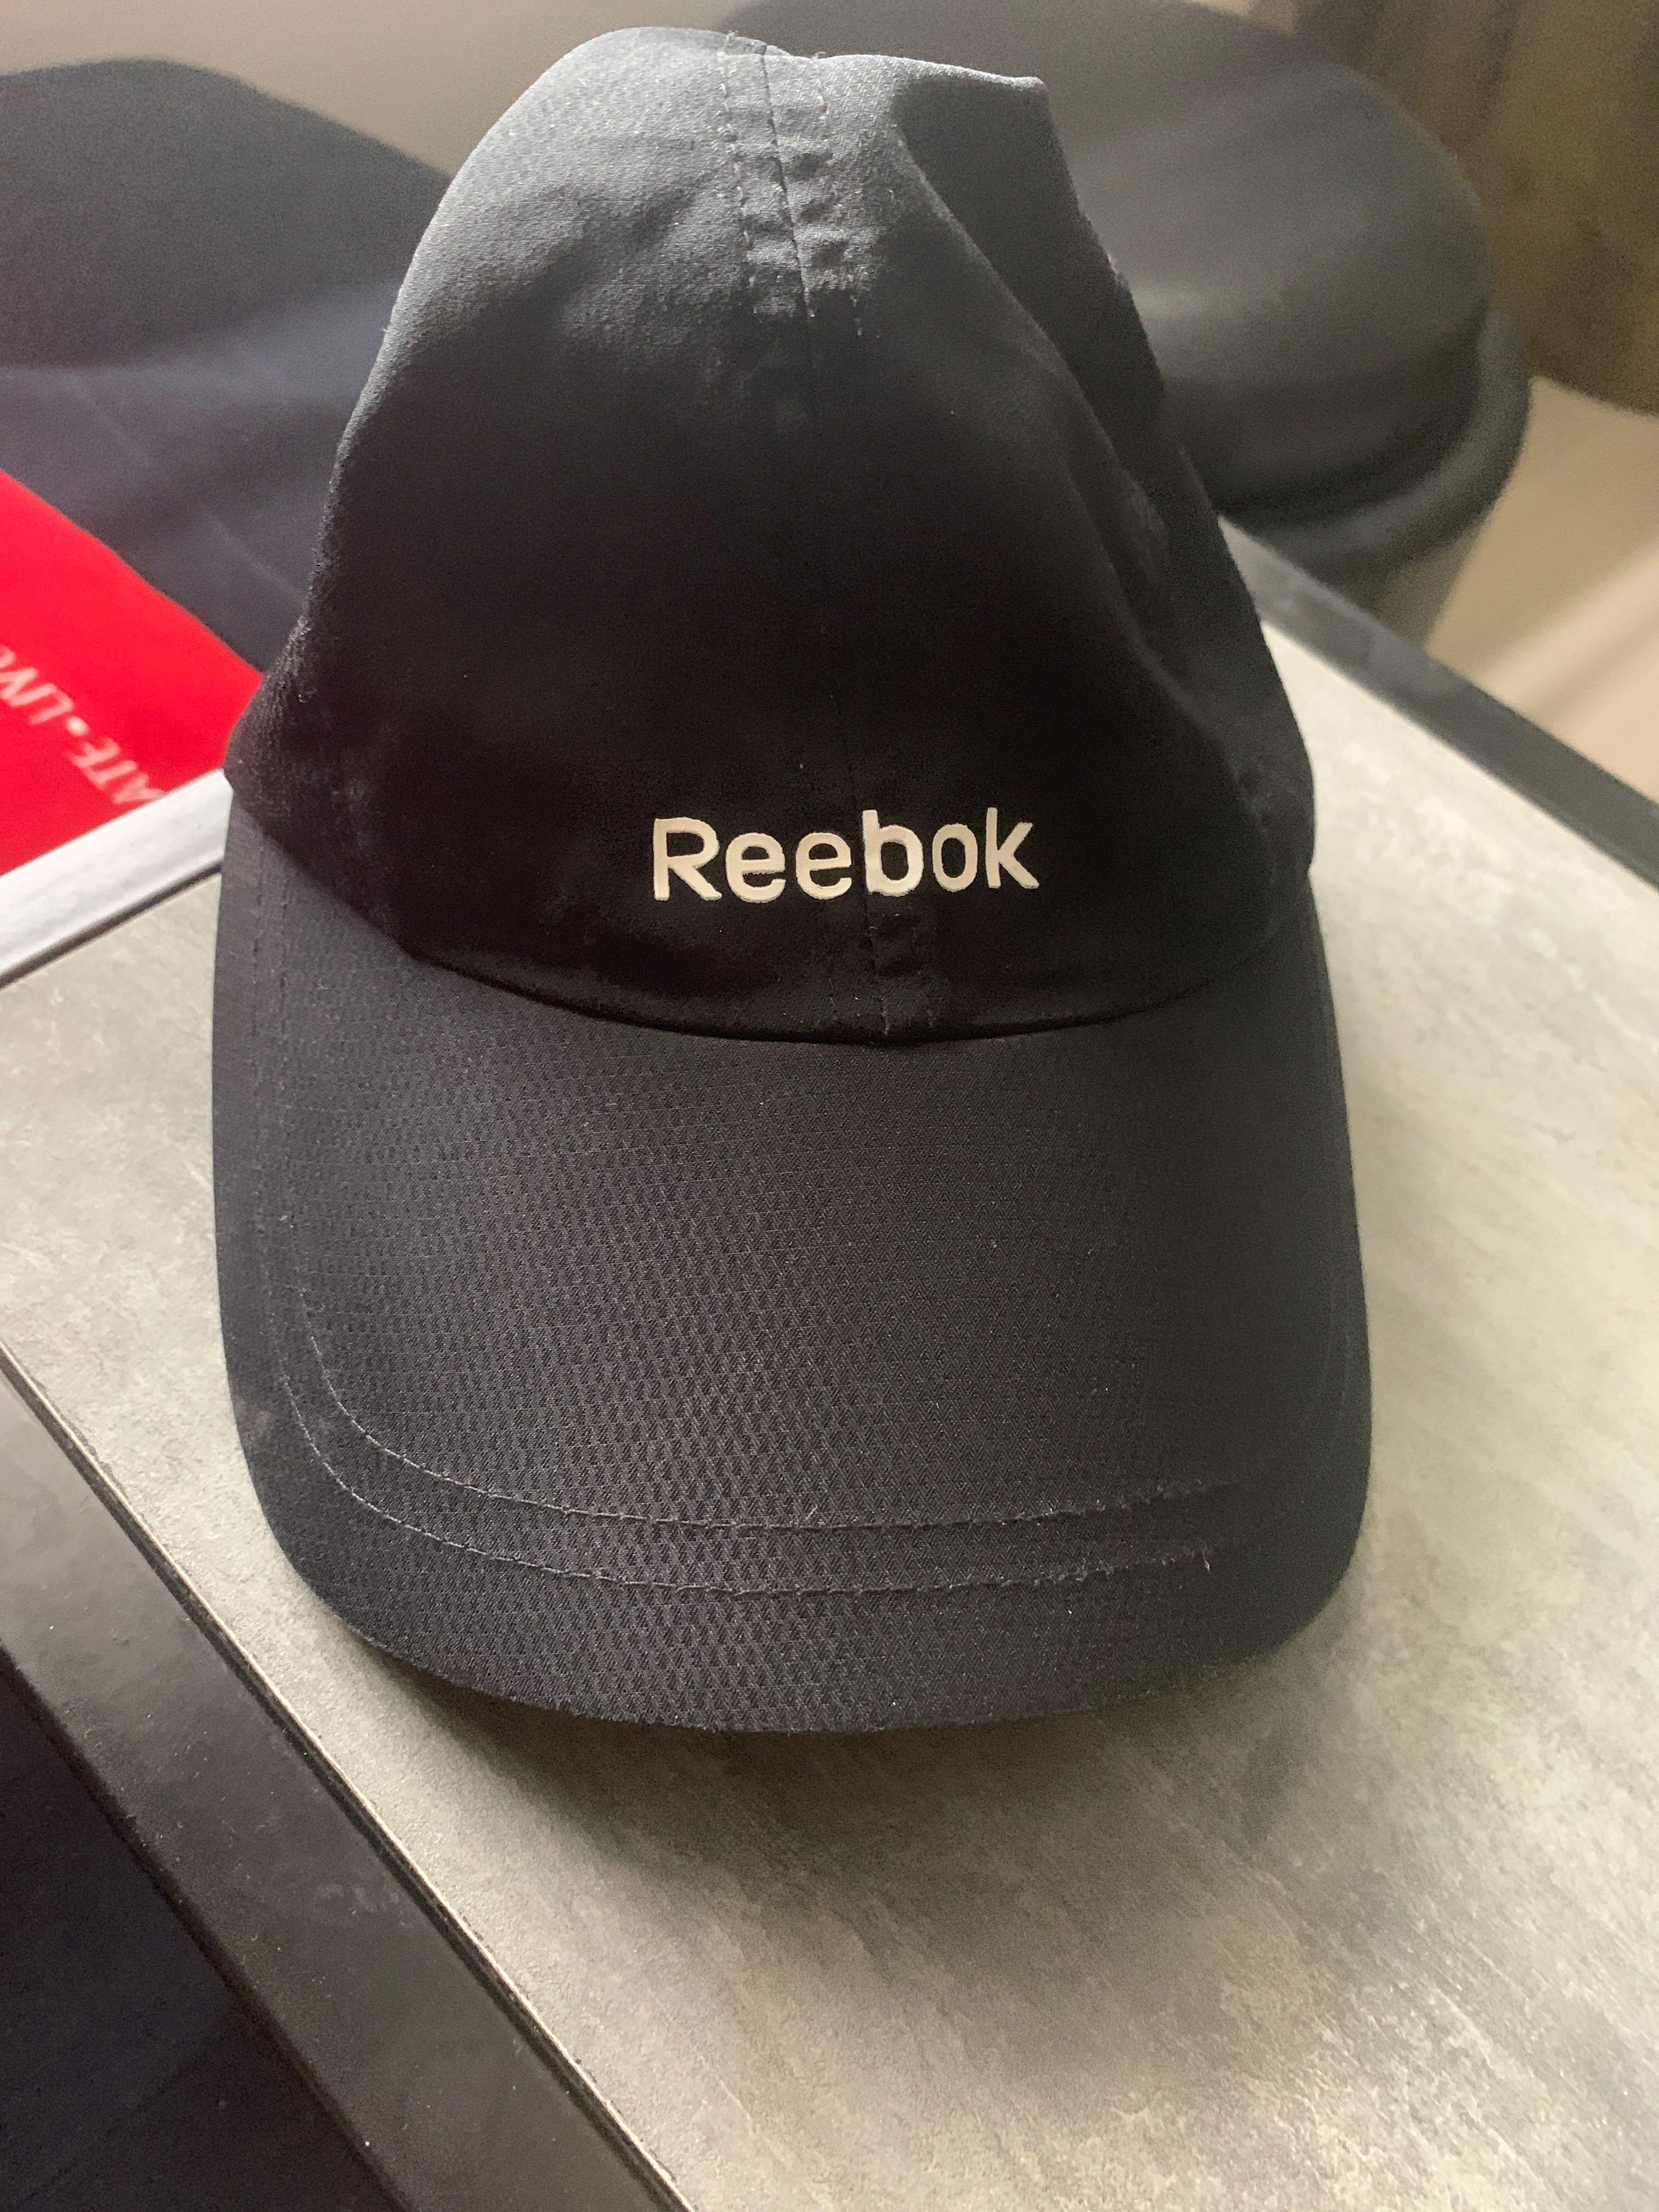 reebok black hat